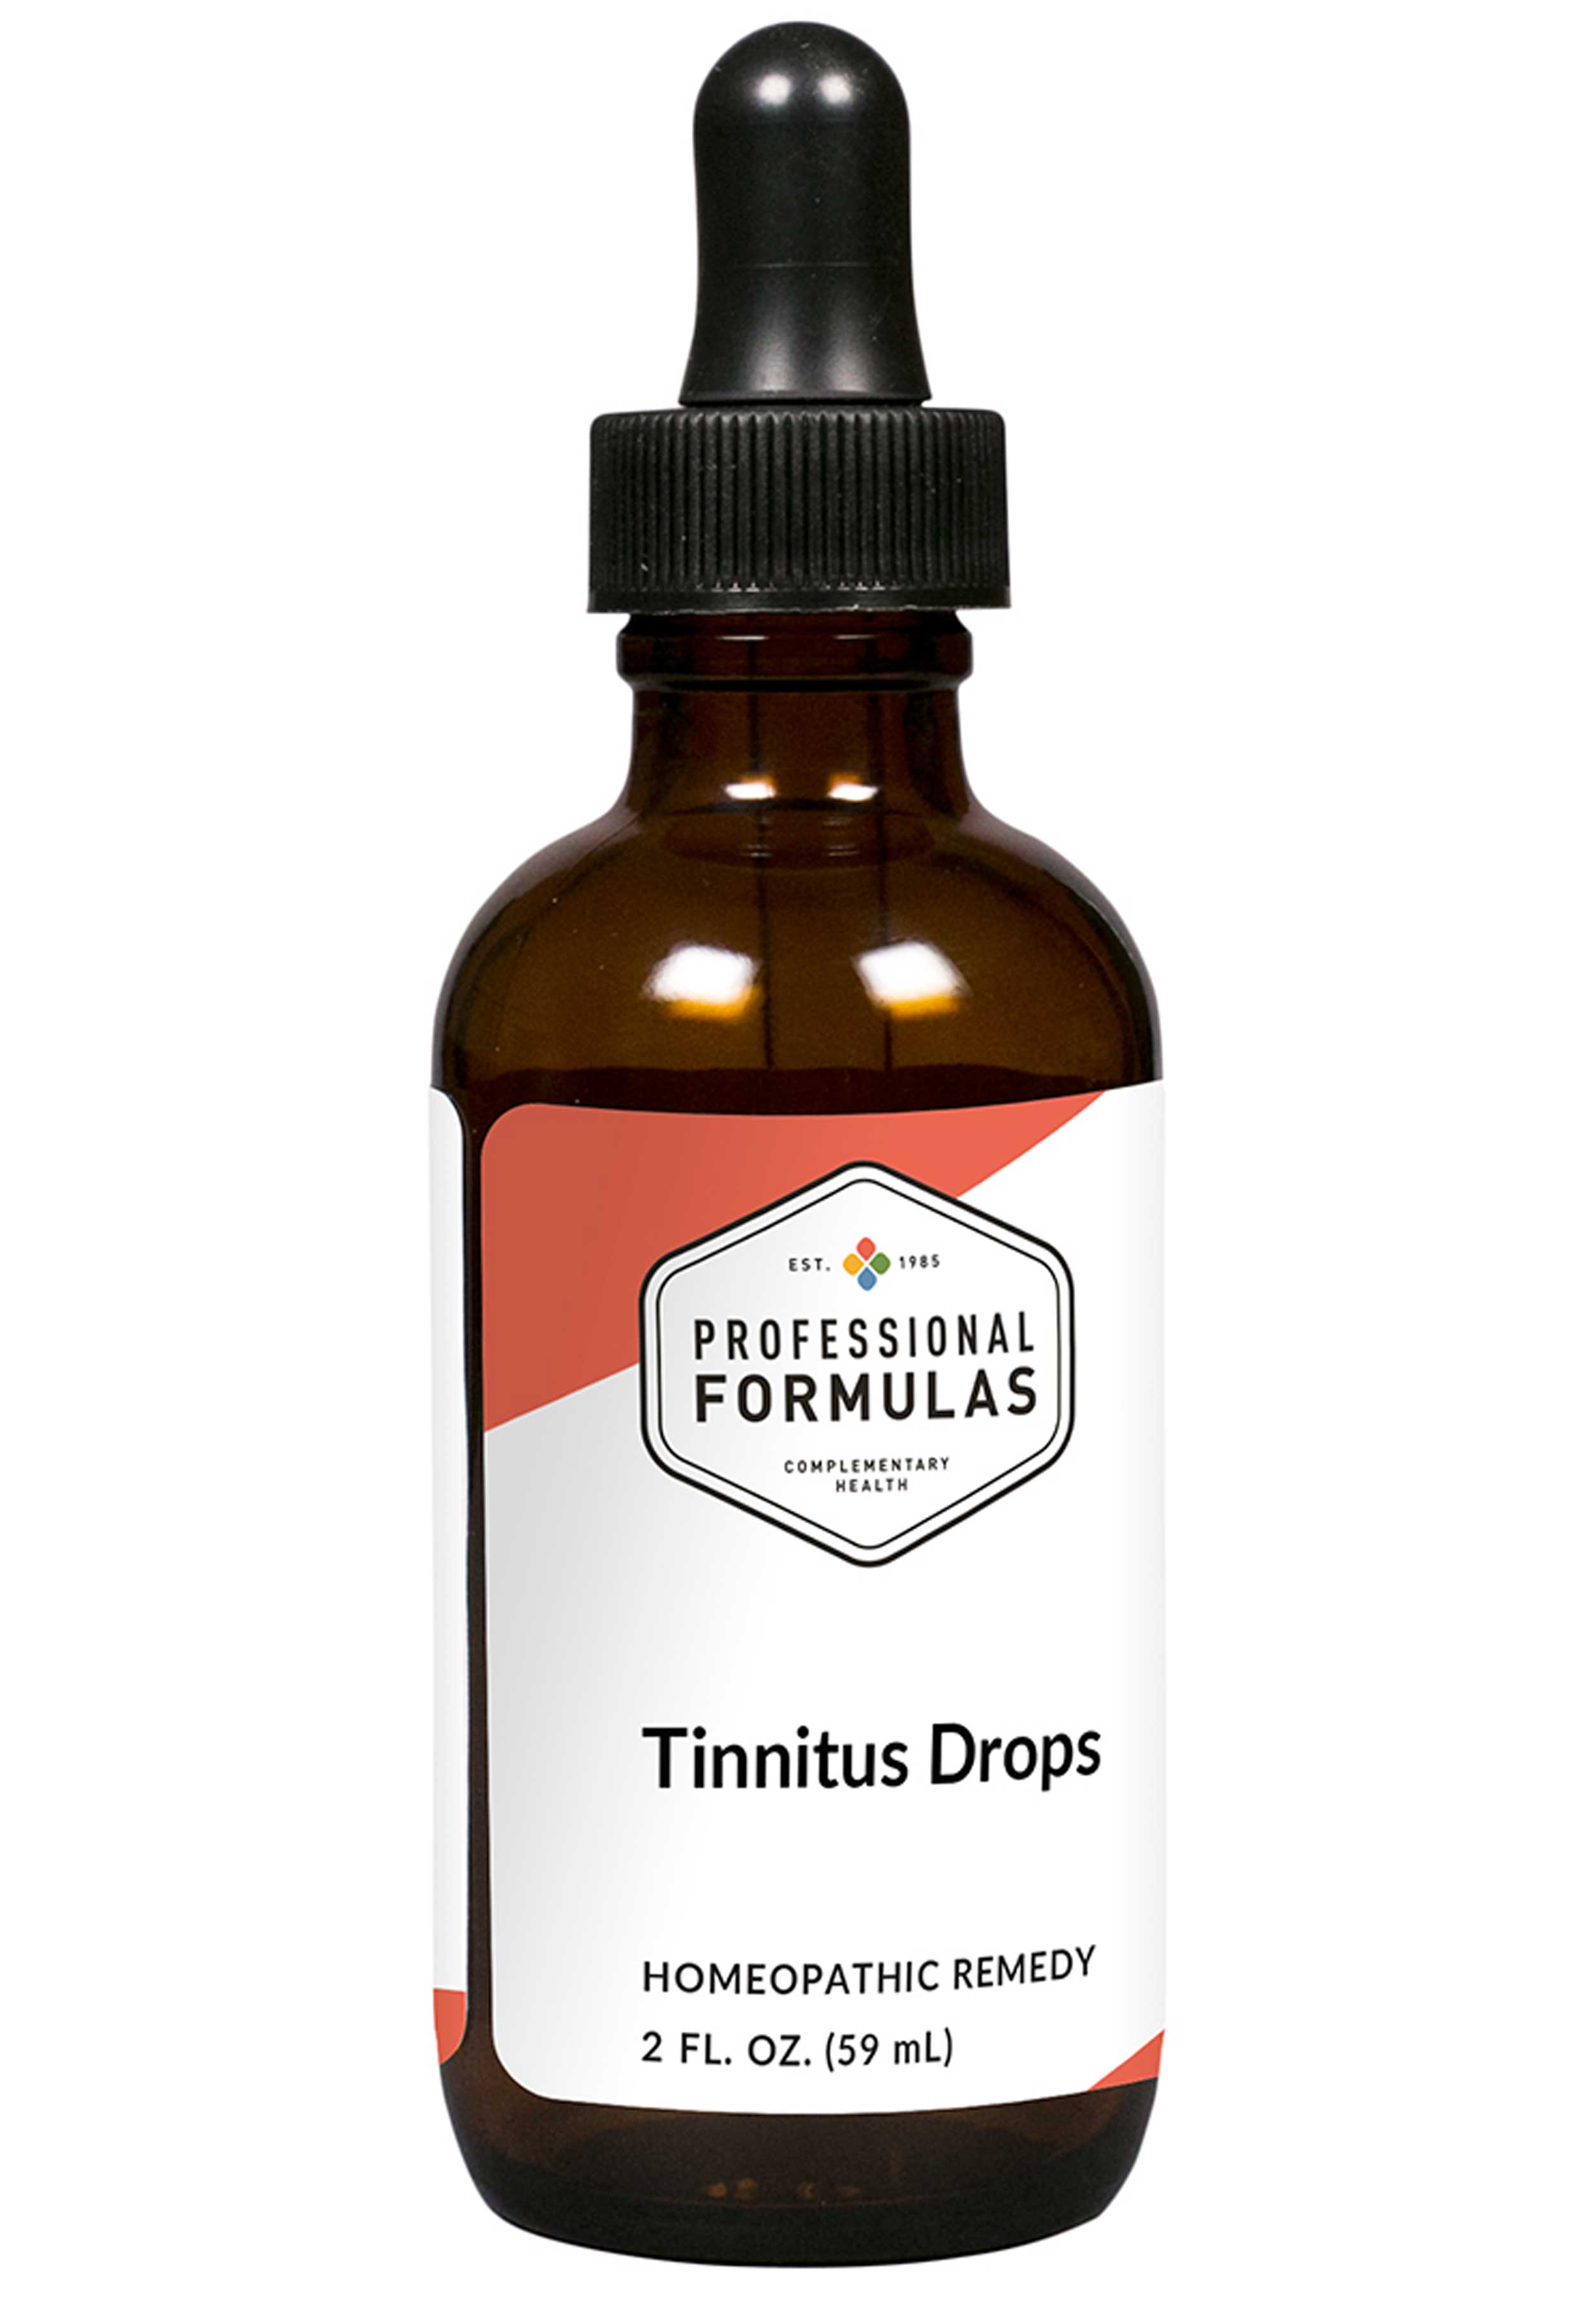 Professional Formulas Tinnitus Formula Drops